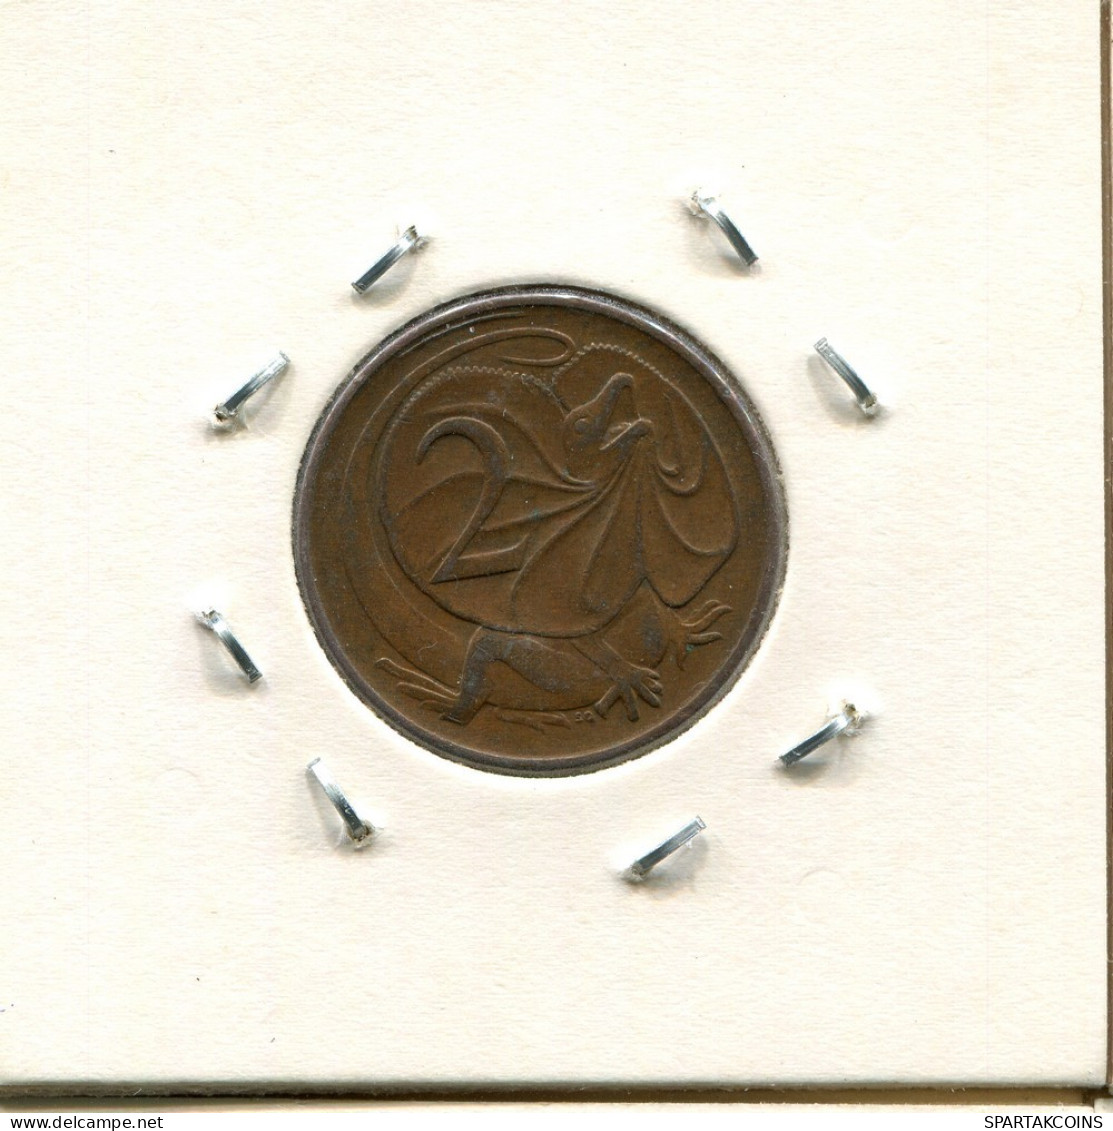 2 CENTS 1966 AUSTRALIA Moneda #AS259.E.A - 2 Cents